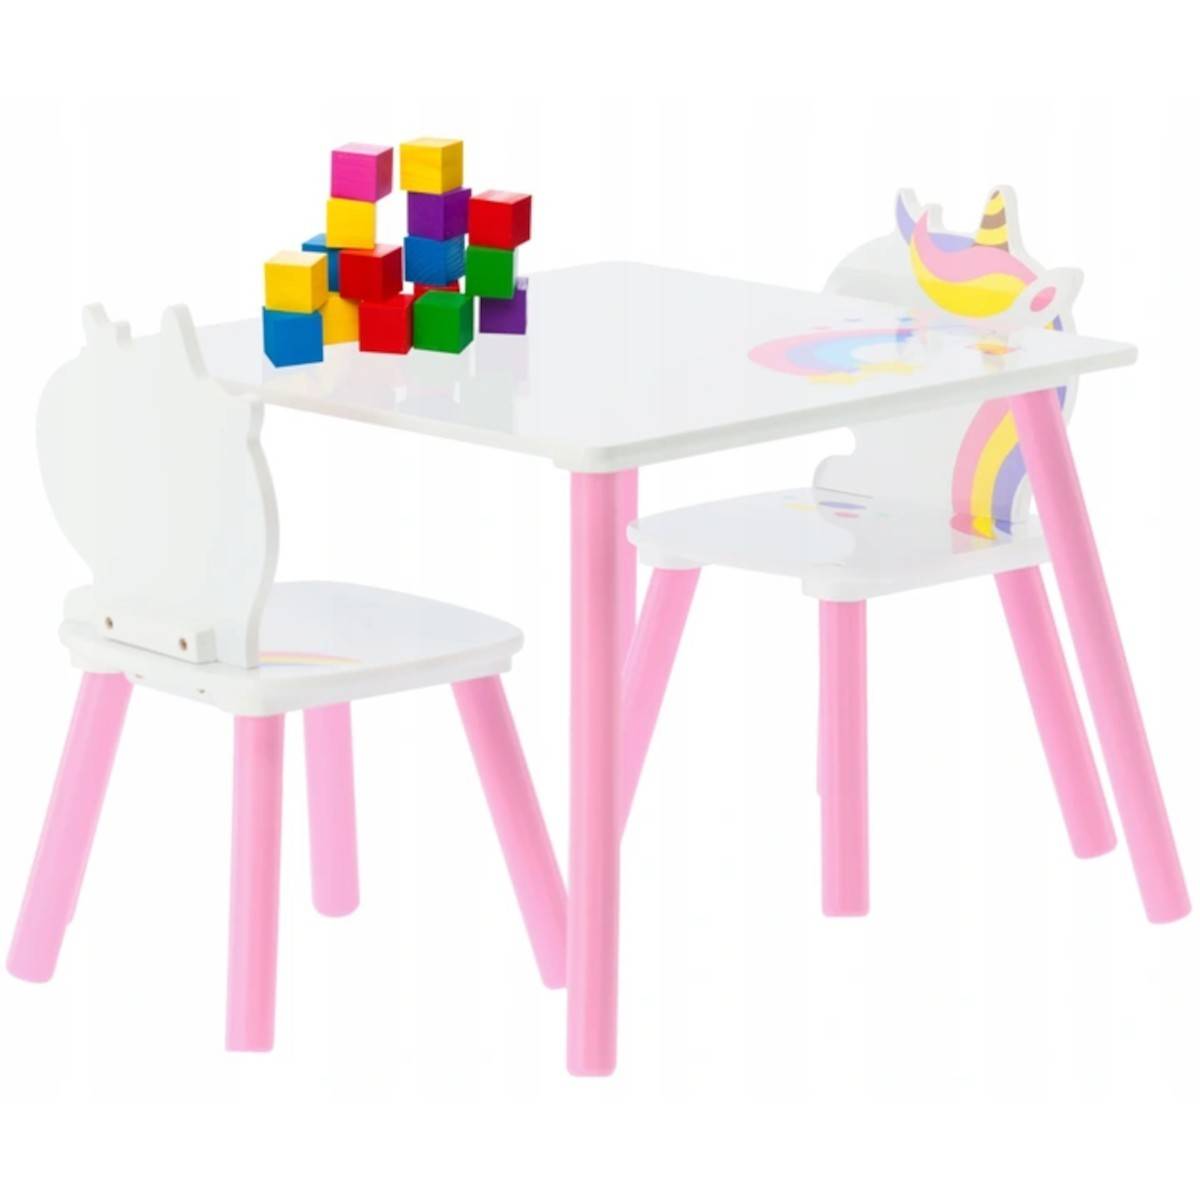 Bake Pelmel Premedication Set masuta cu 2 scaune pentru copii, roz, alb,lemn, MDF, Unicorn